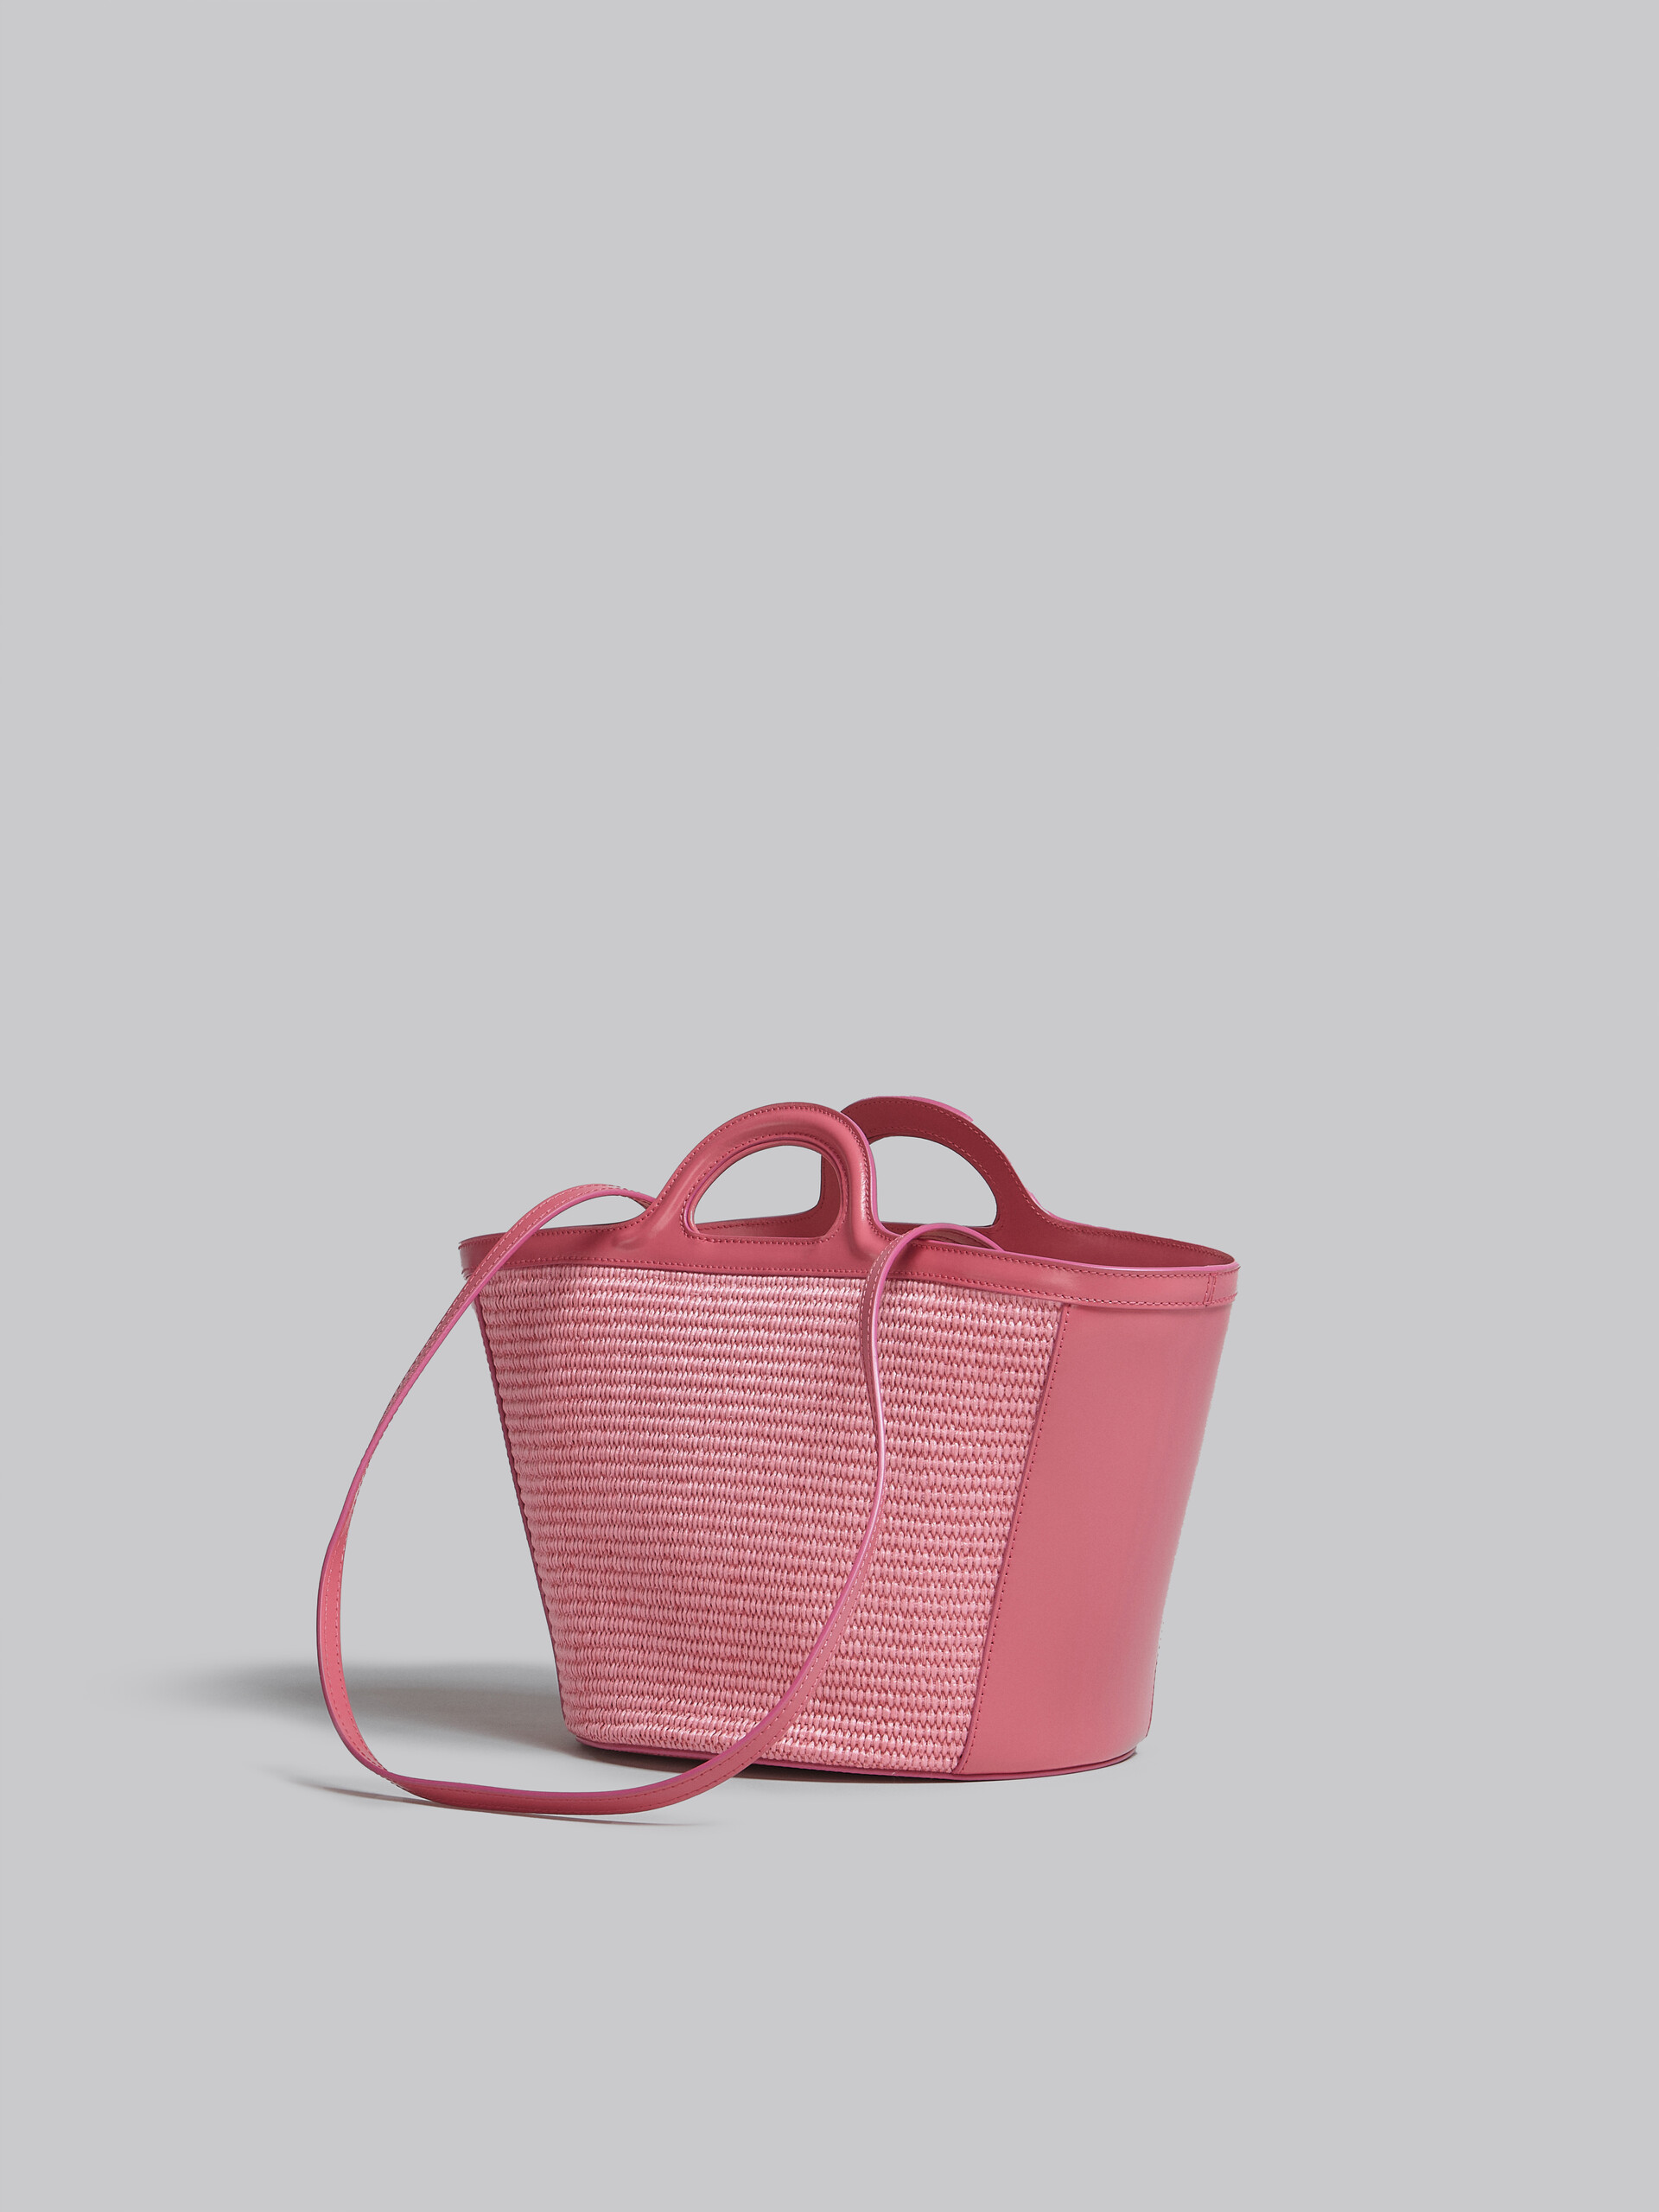 TROPICALIA small bag in pink leather and raffia - Handbag - Image 3